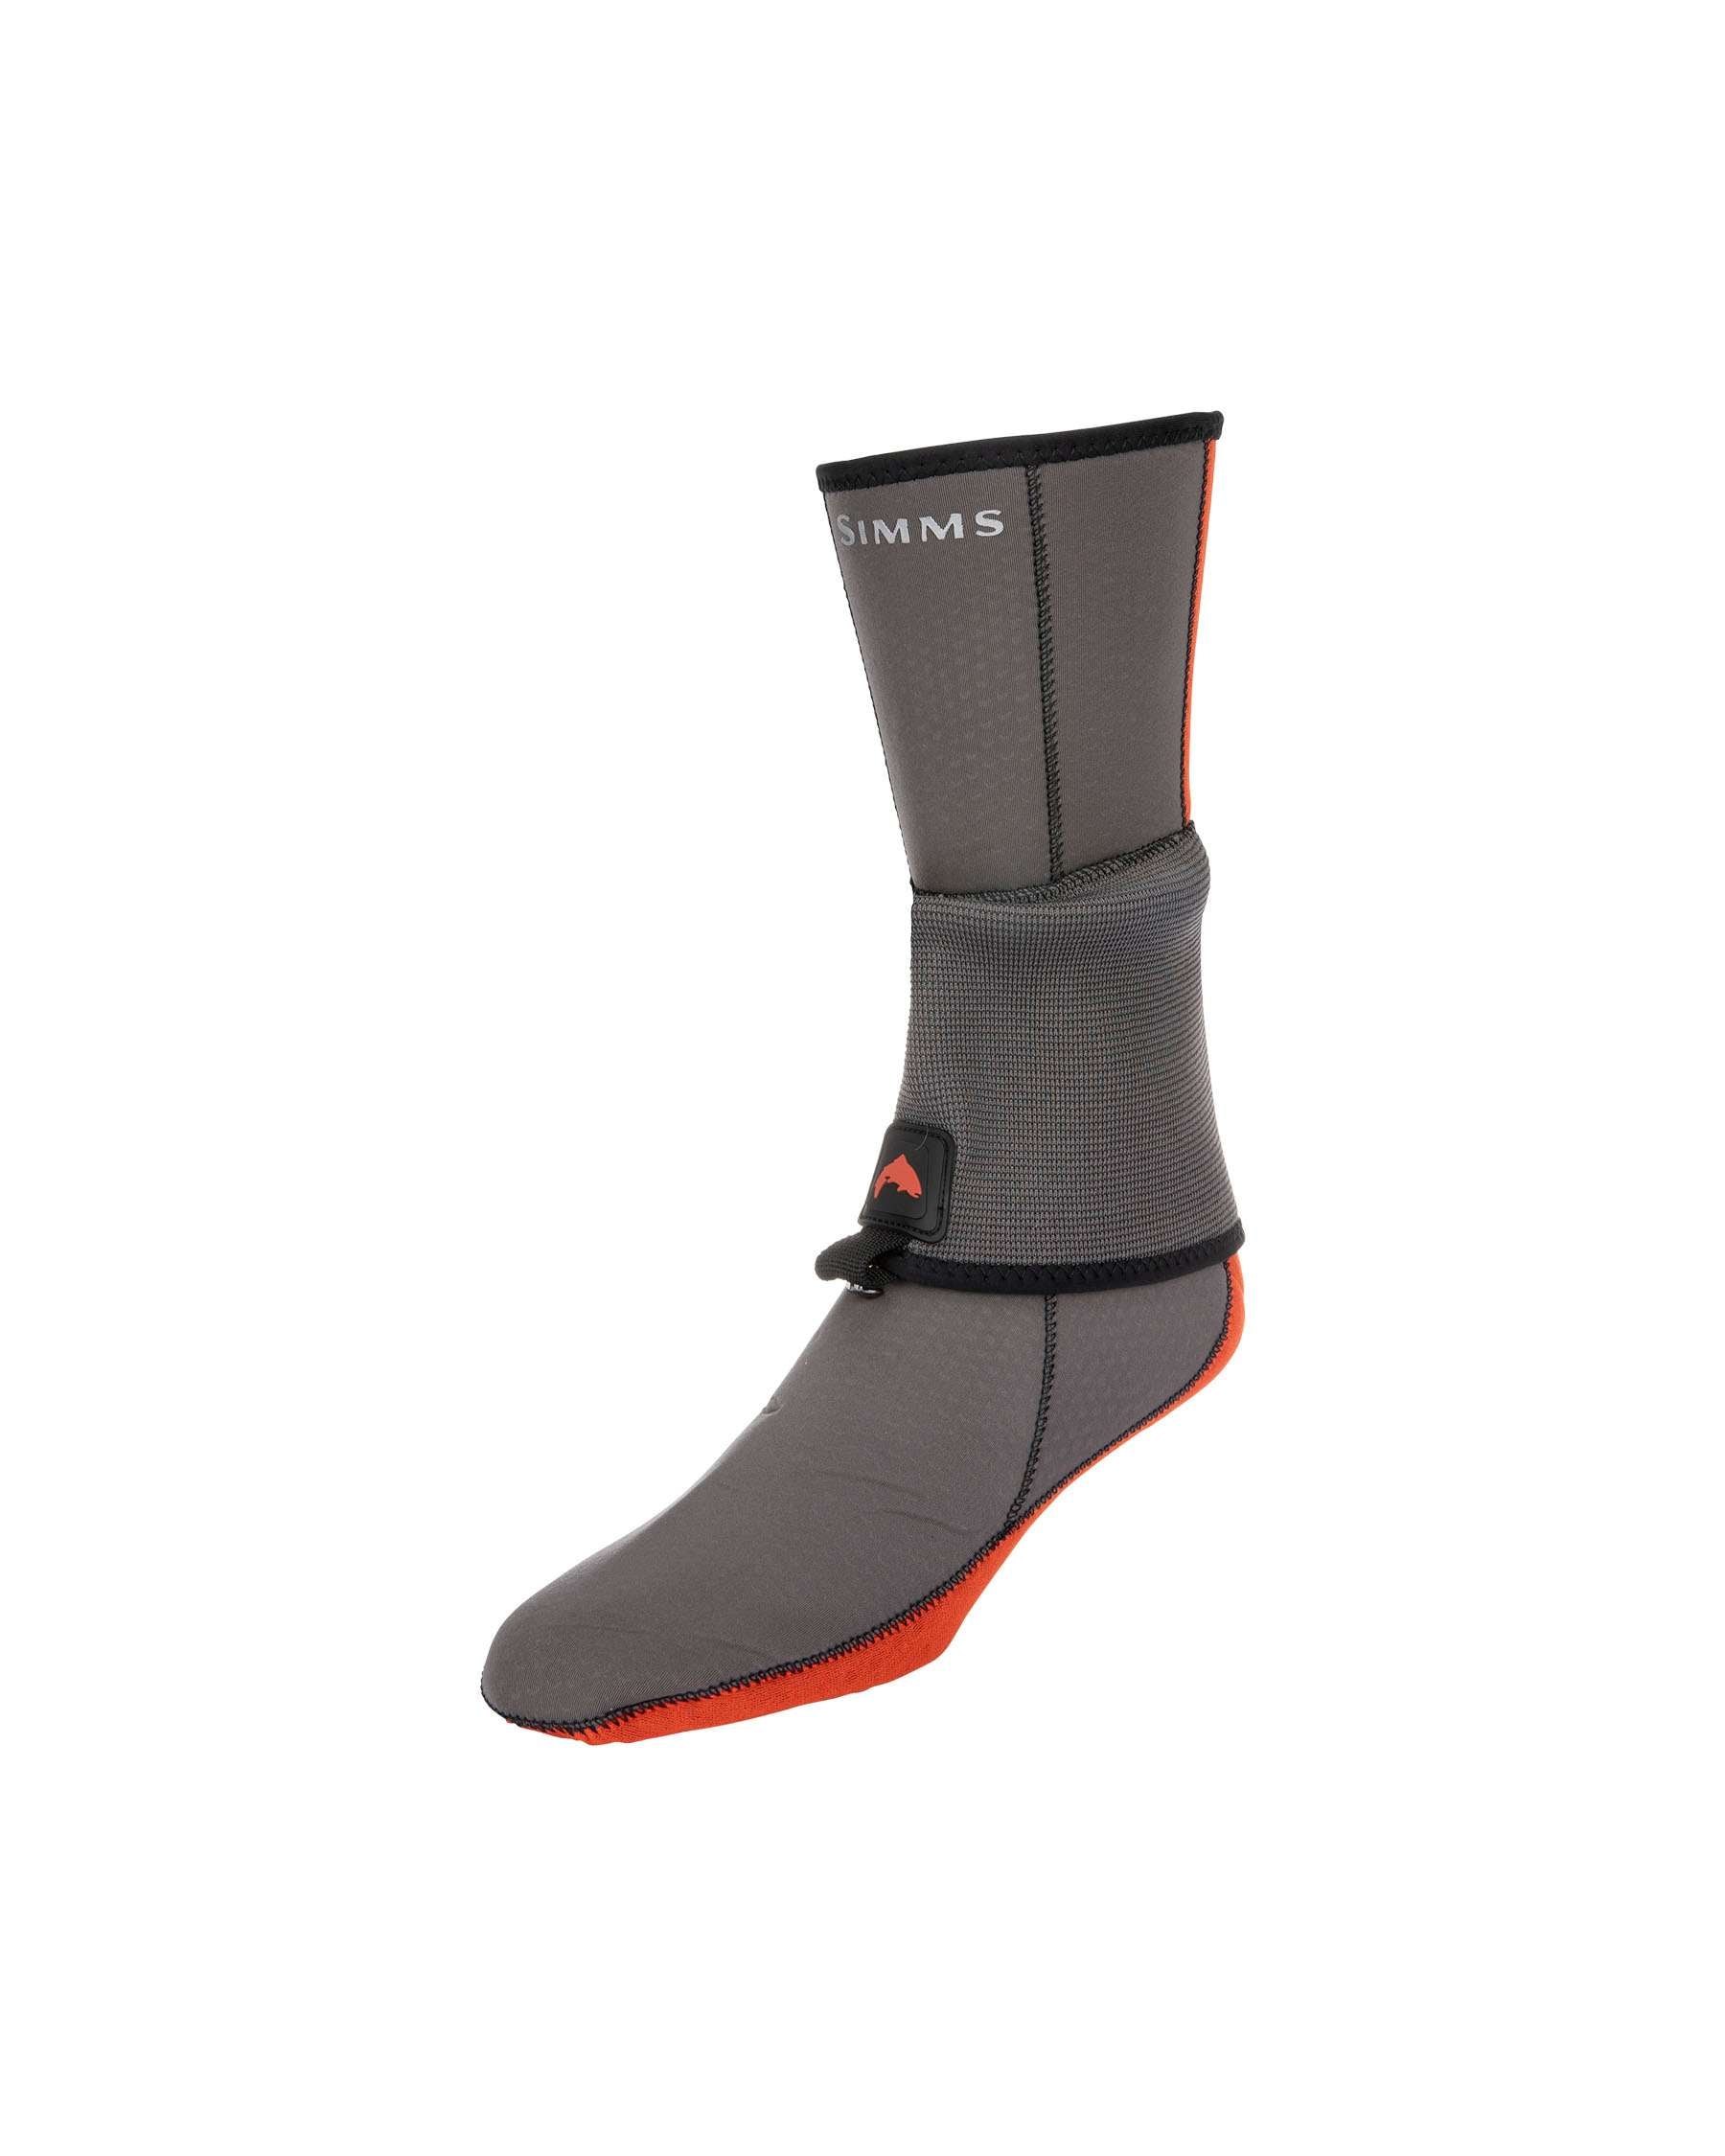 M's Neoprene Flyweight® Wading Socks | Simms Fishing Products